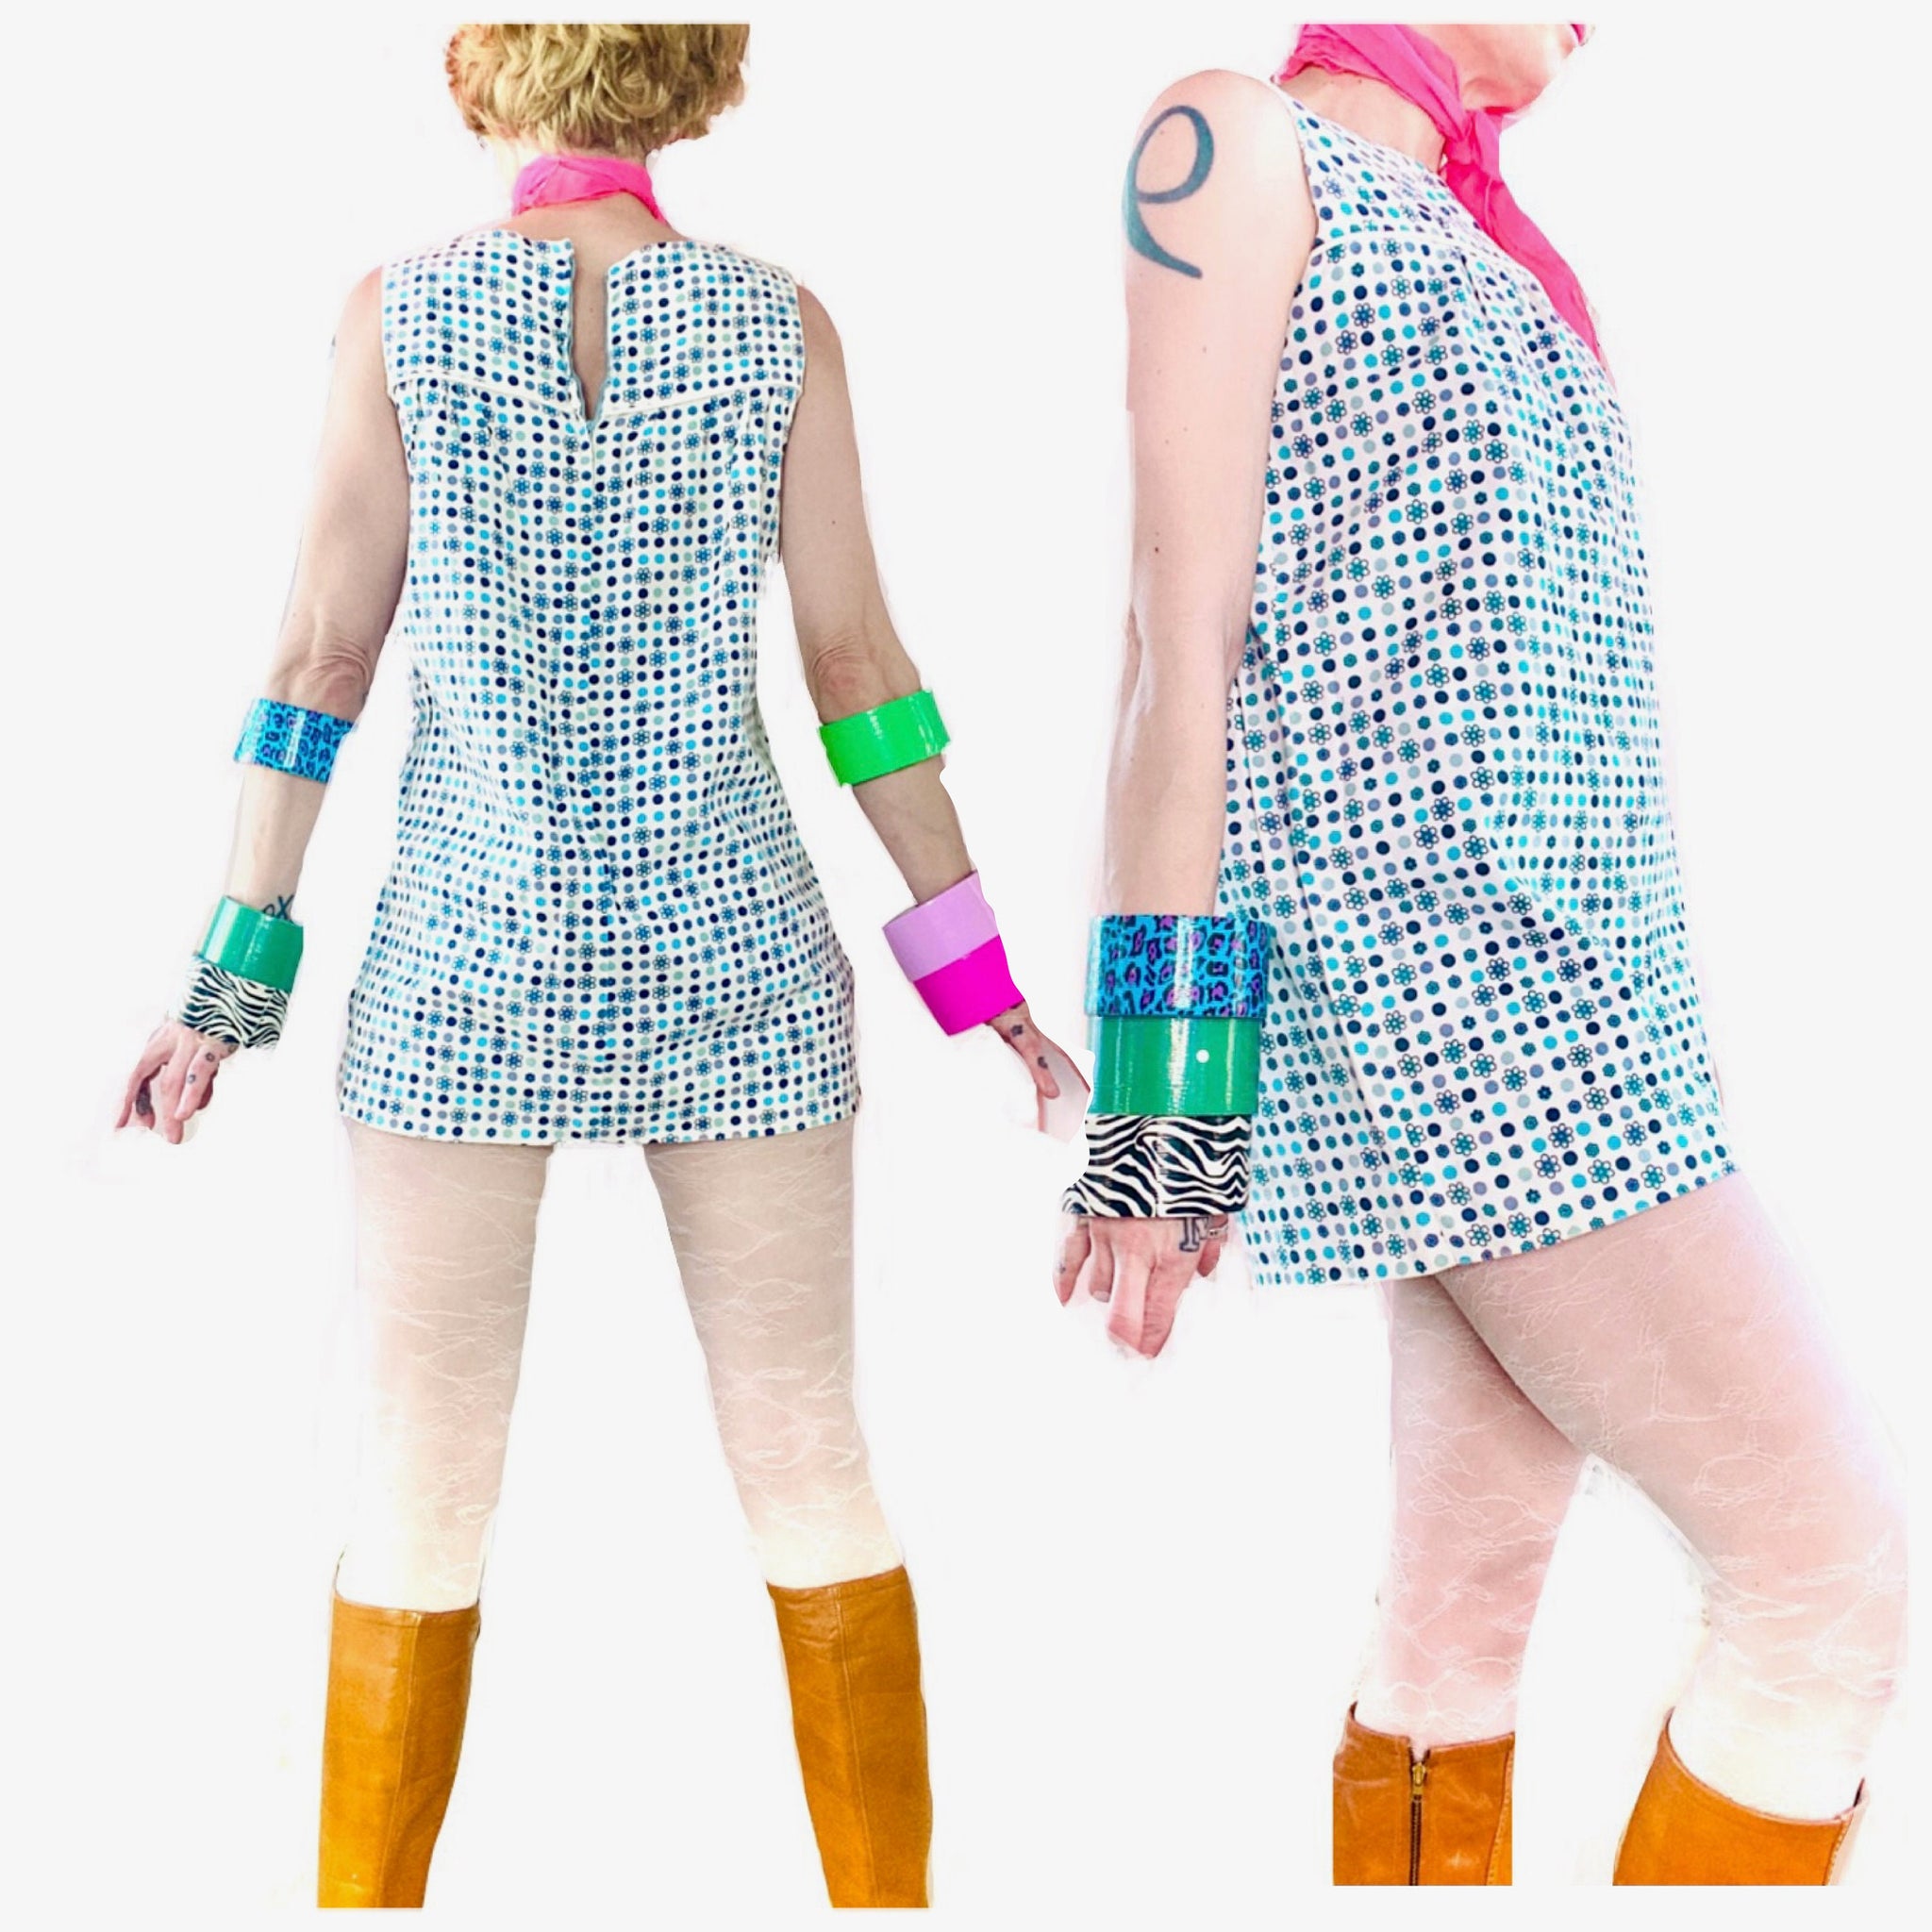 Vintage 60's psychedelic mod micro mini shift dress